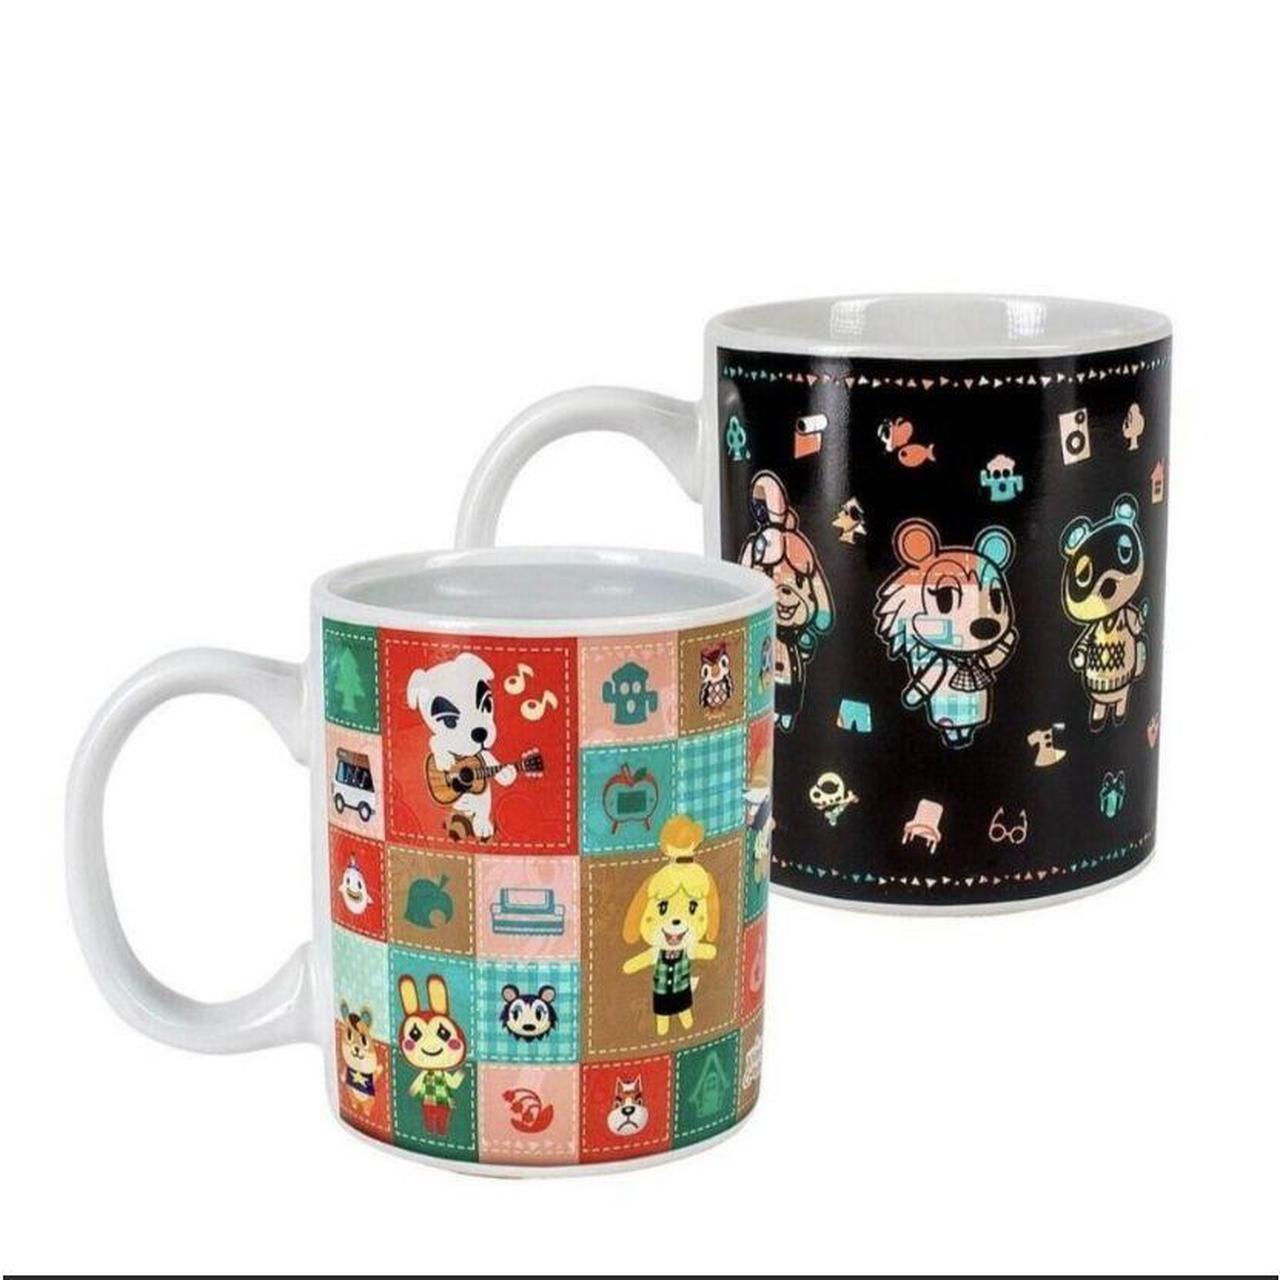 Animal Crossing - Heat Change Ceramic Mug 10oz